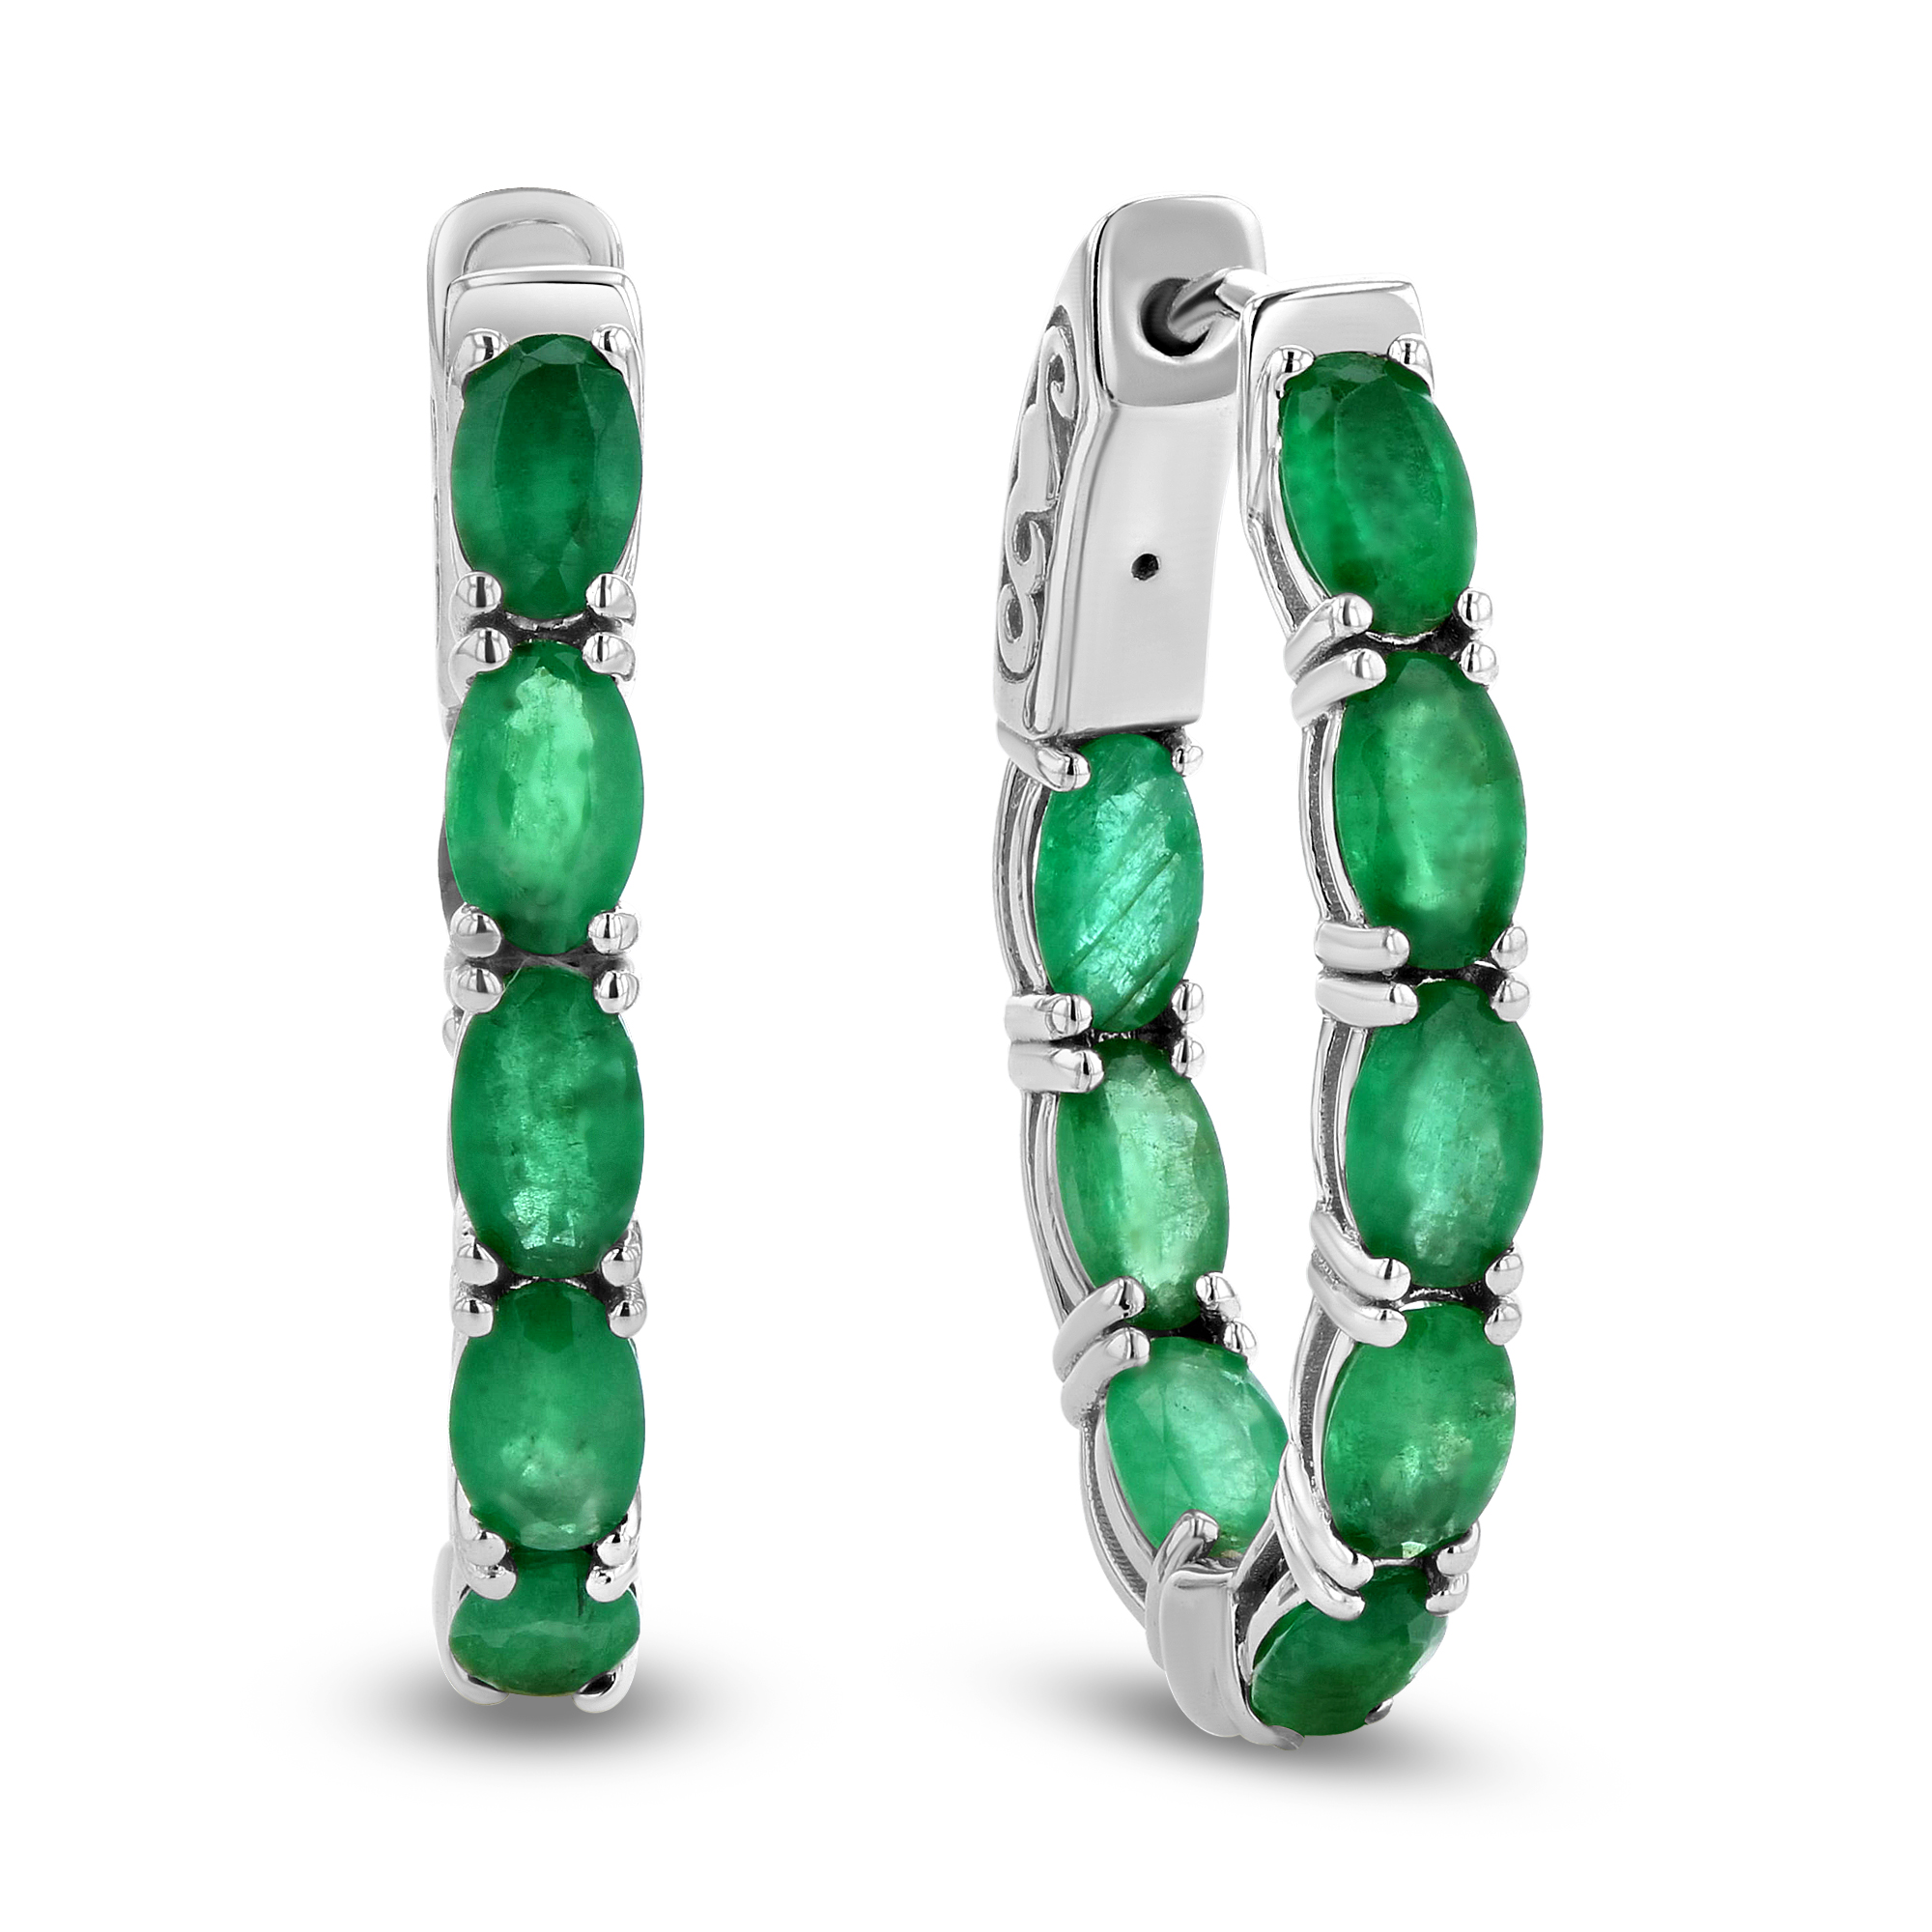 View 3.40ctw Oval Emerald Hoop Earrings in 14k White Gold